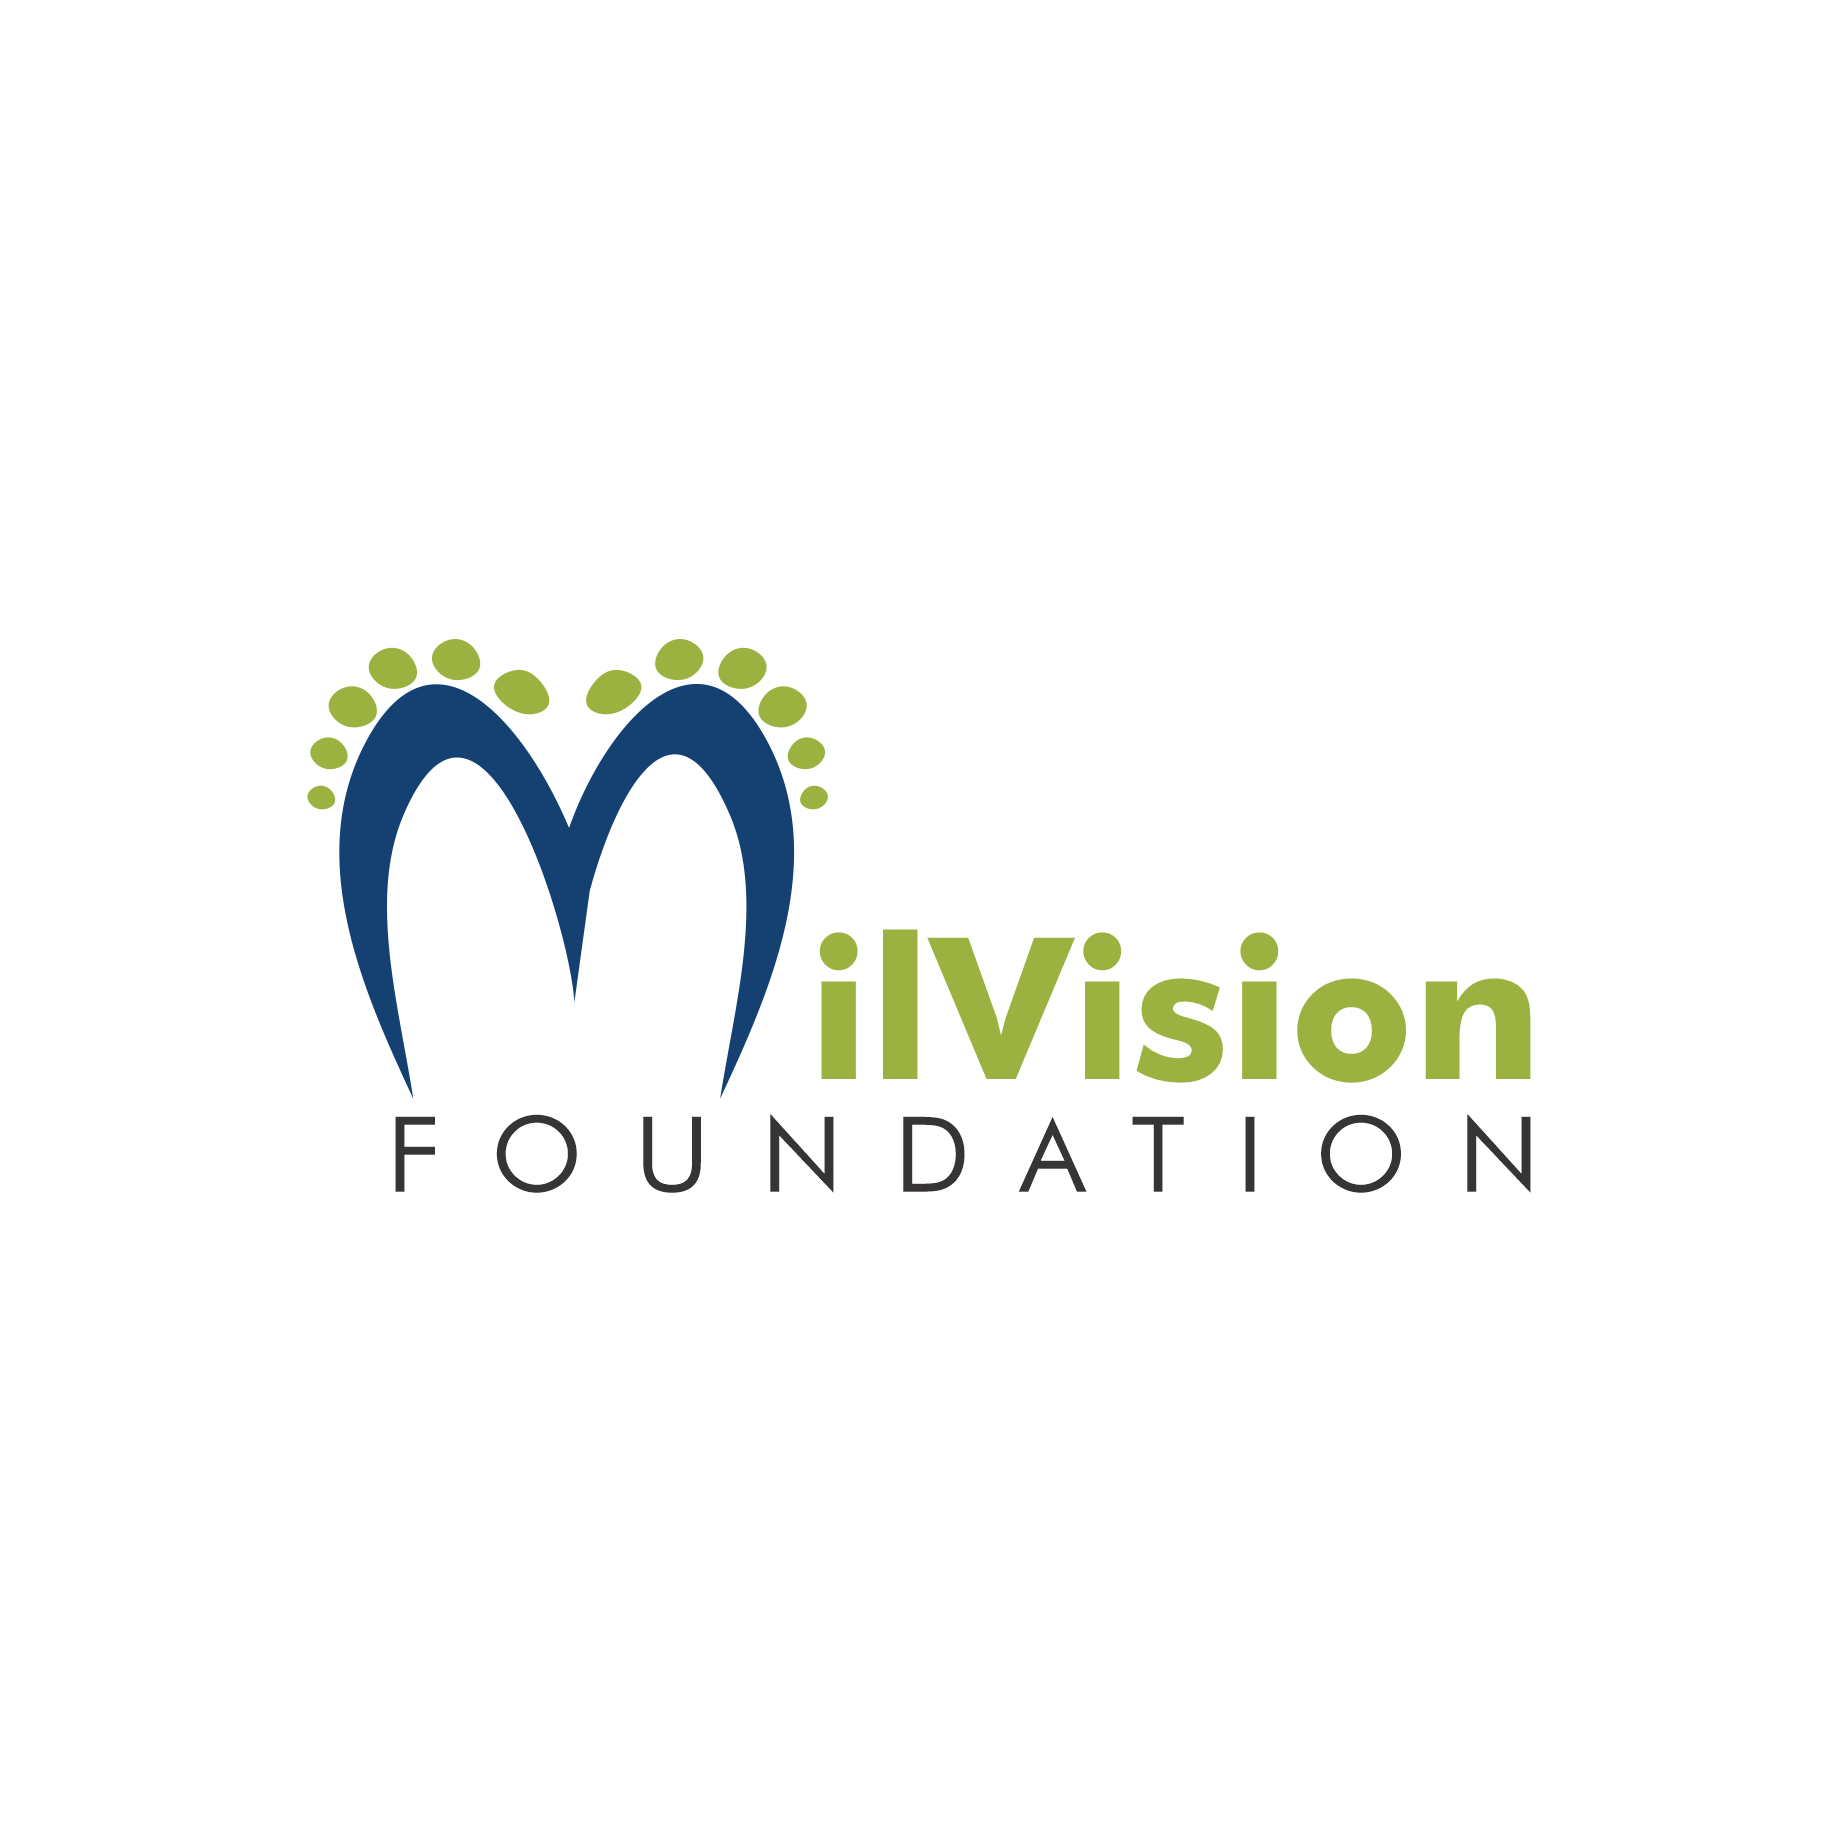 The Mil Vision Foundation logo